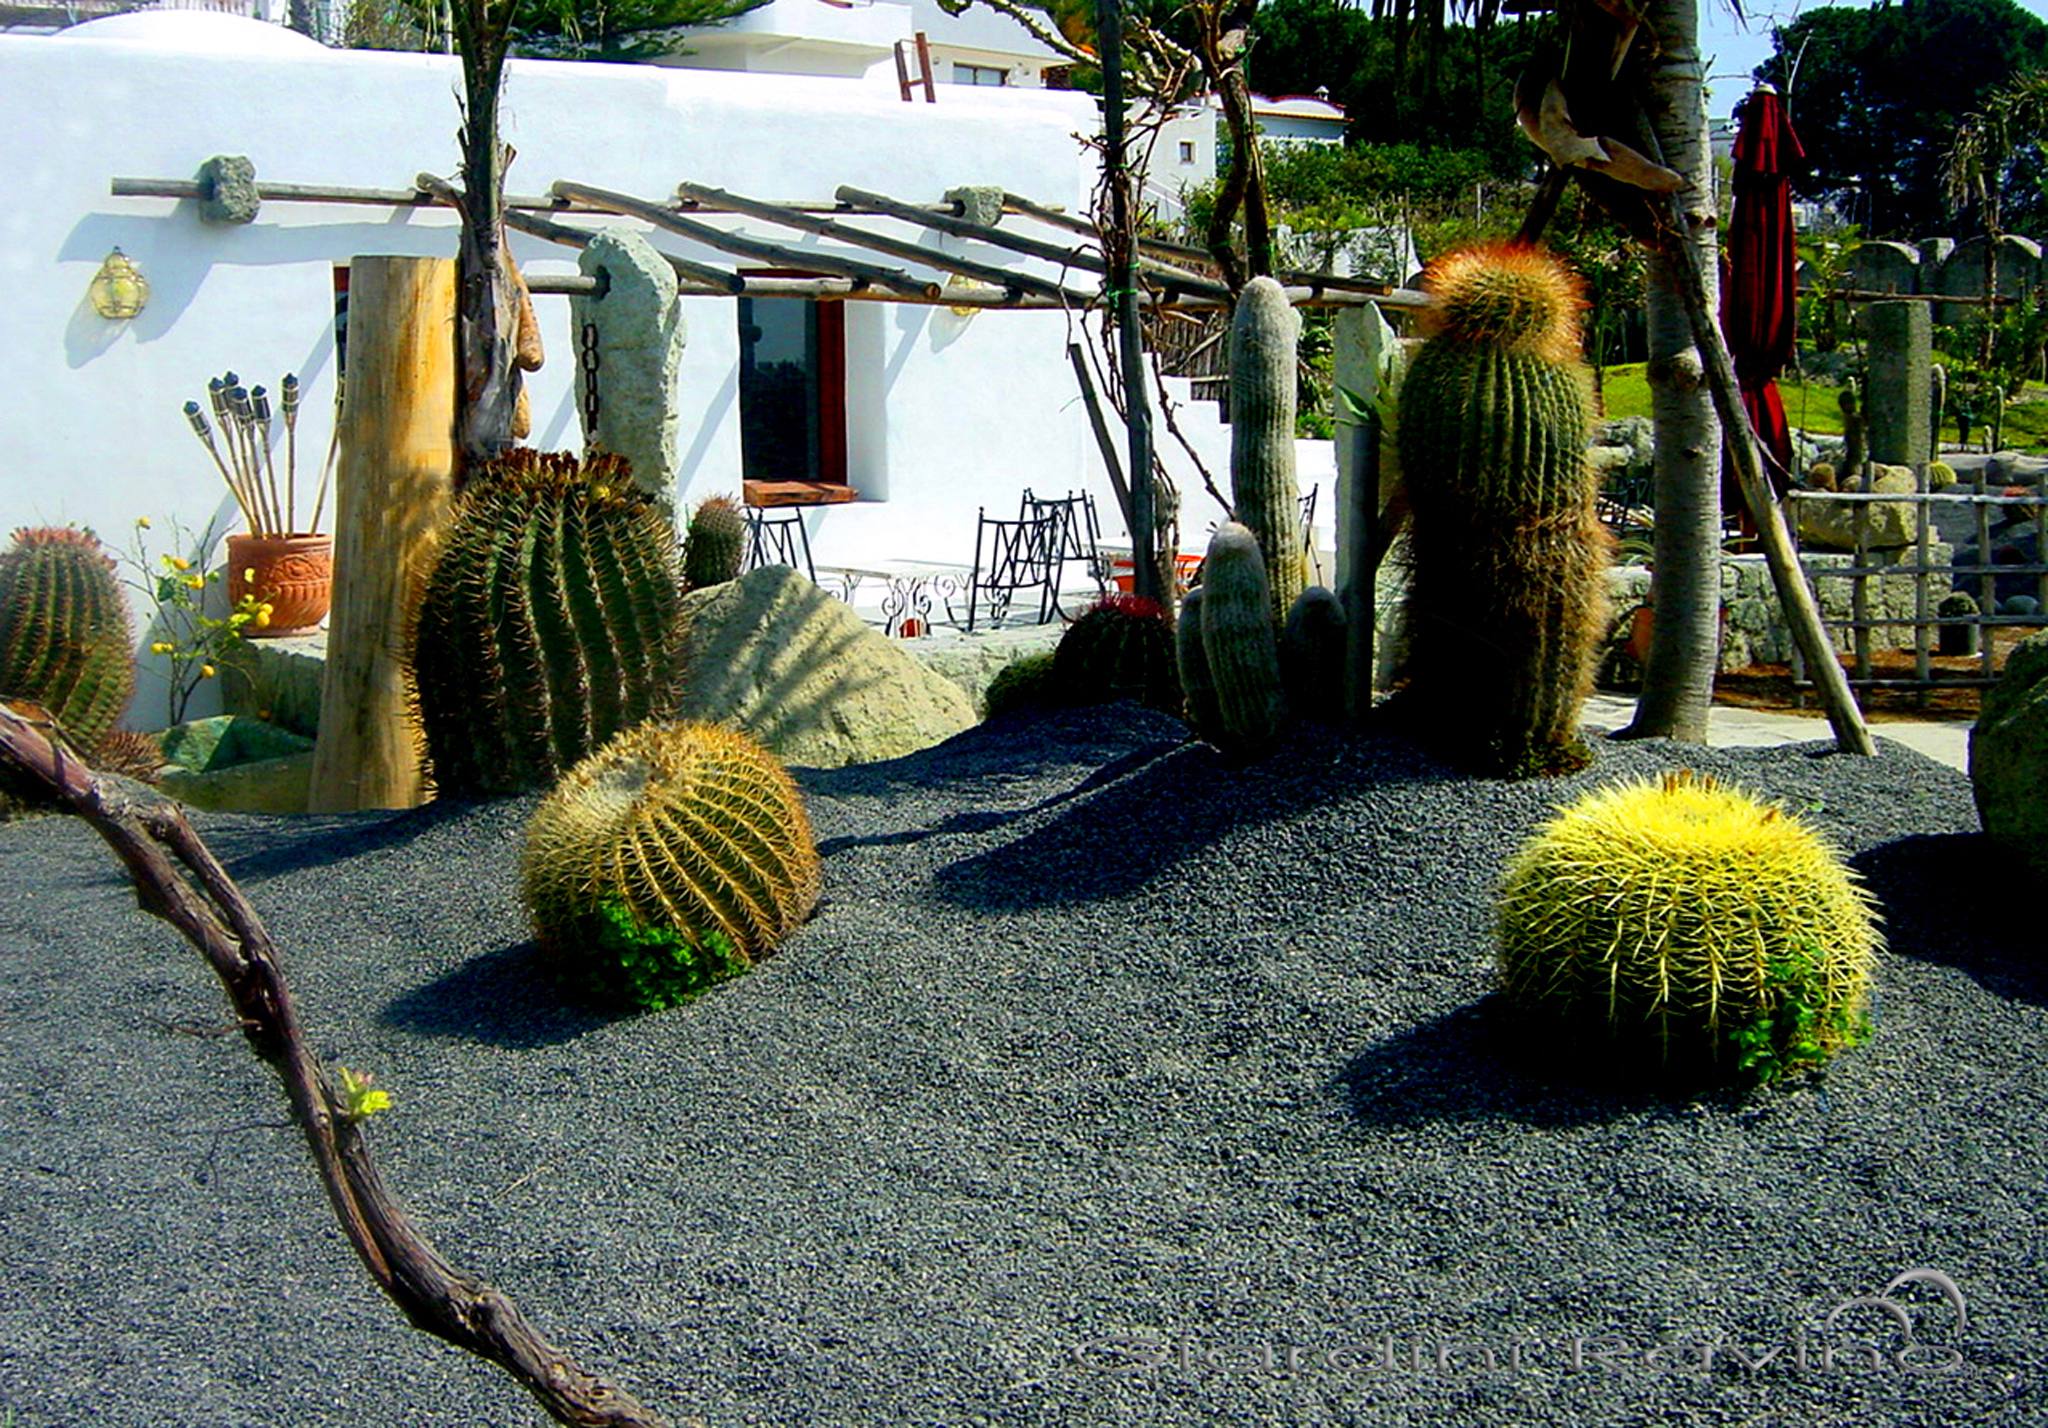 cactus lounge